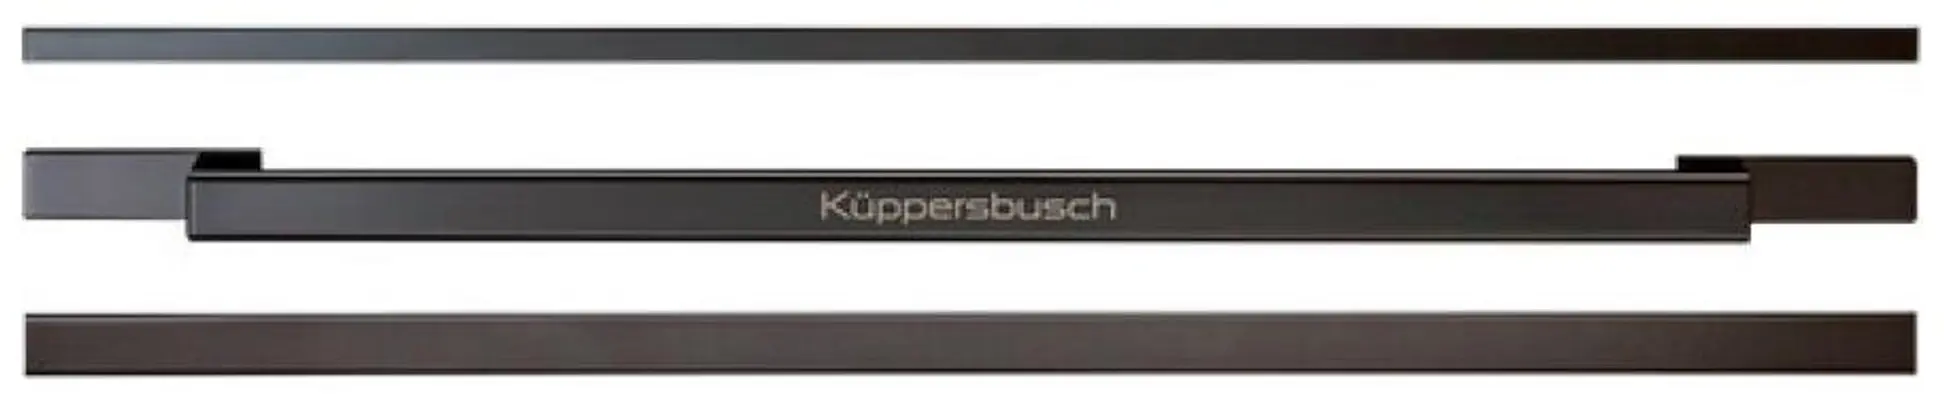 DK2004-Kuppersbusch-Koel-vries-accessoires